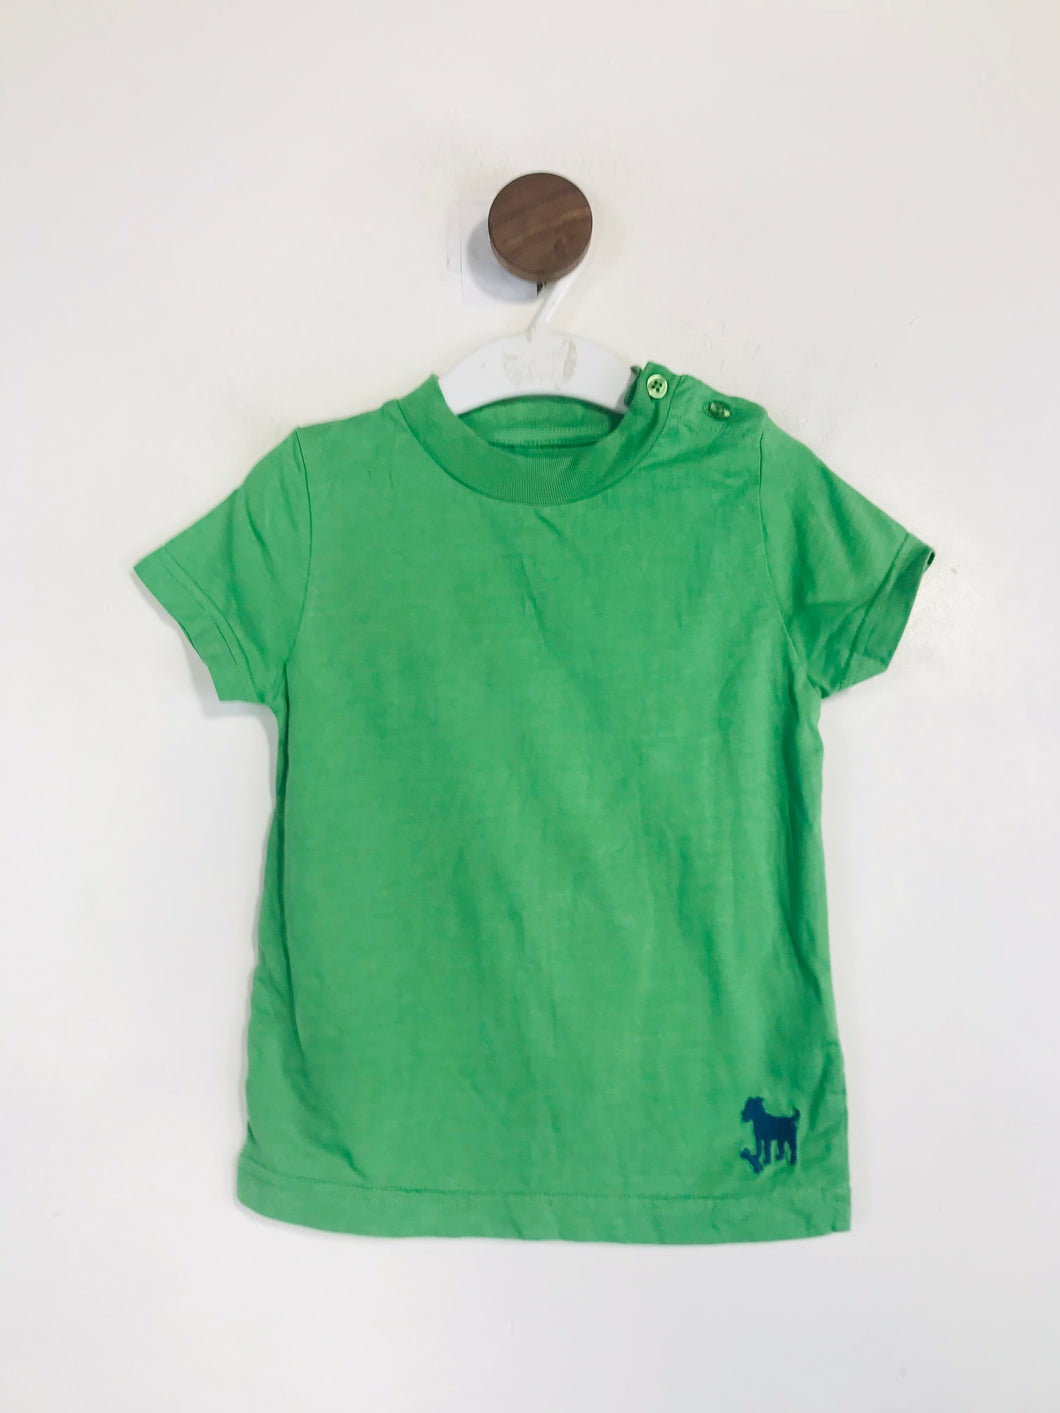 Boden Kid's T-Shirt | 1.5-2 Years | Green